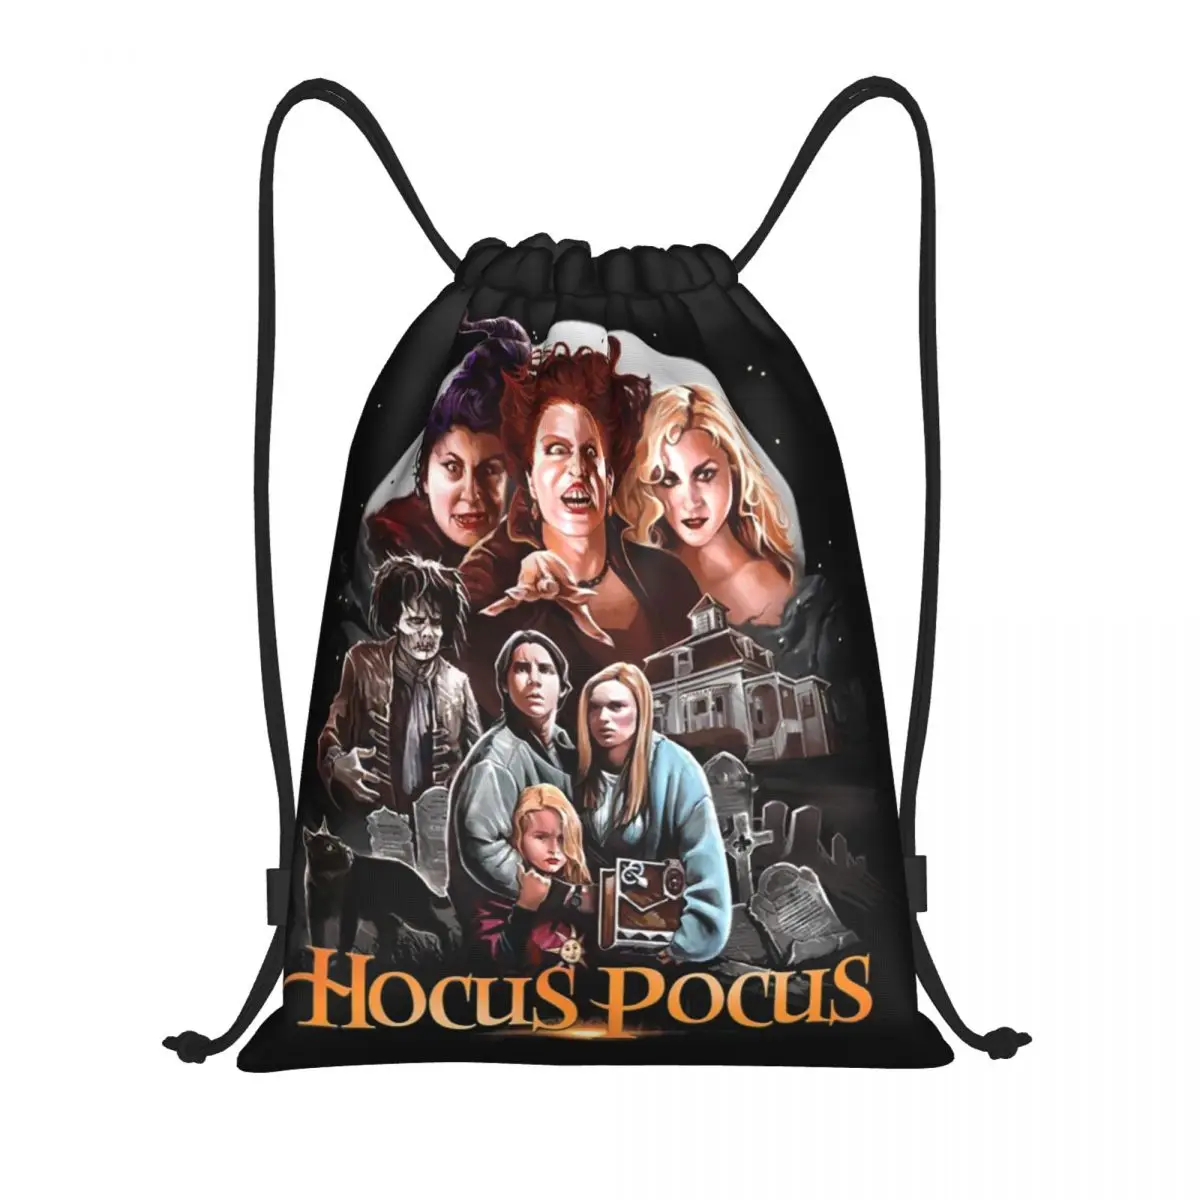 Hocus Halloween Night Pocus Drawstring Backpack Women Men Gym Sport Sackpack Portable Witch Horror Movie Training Bag Sack